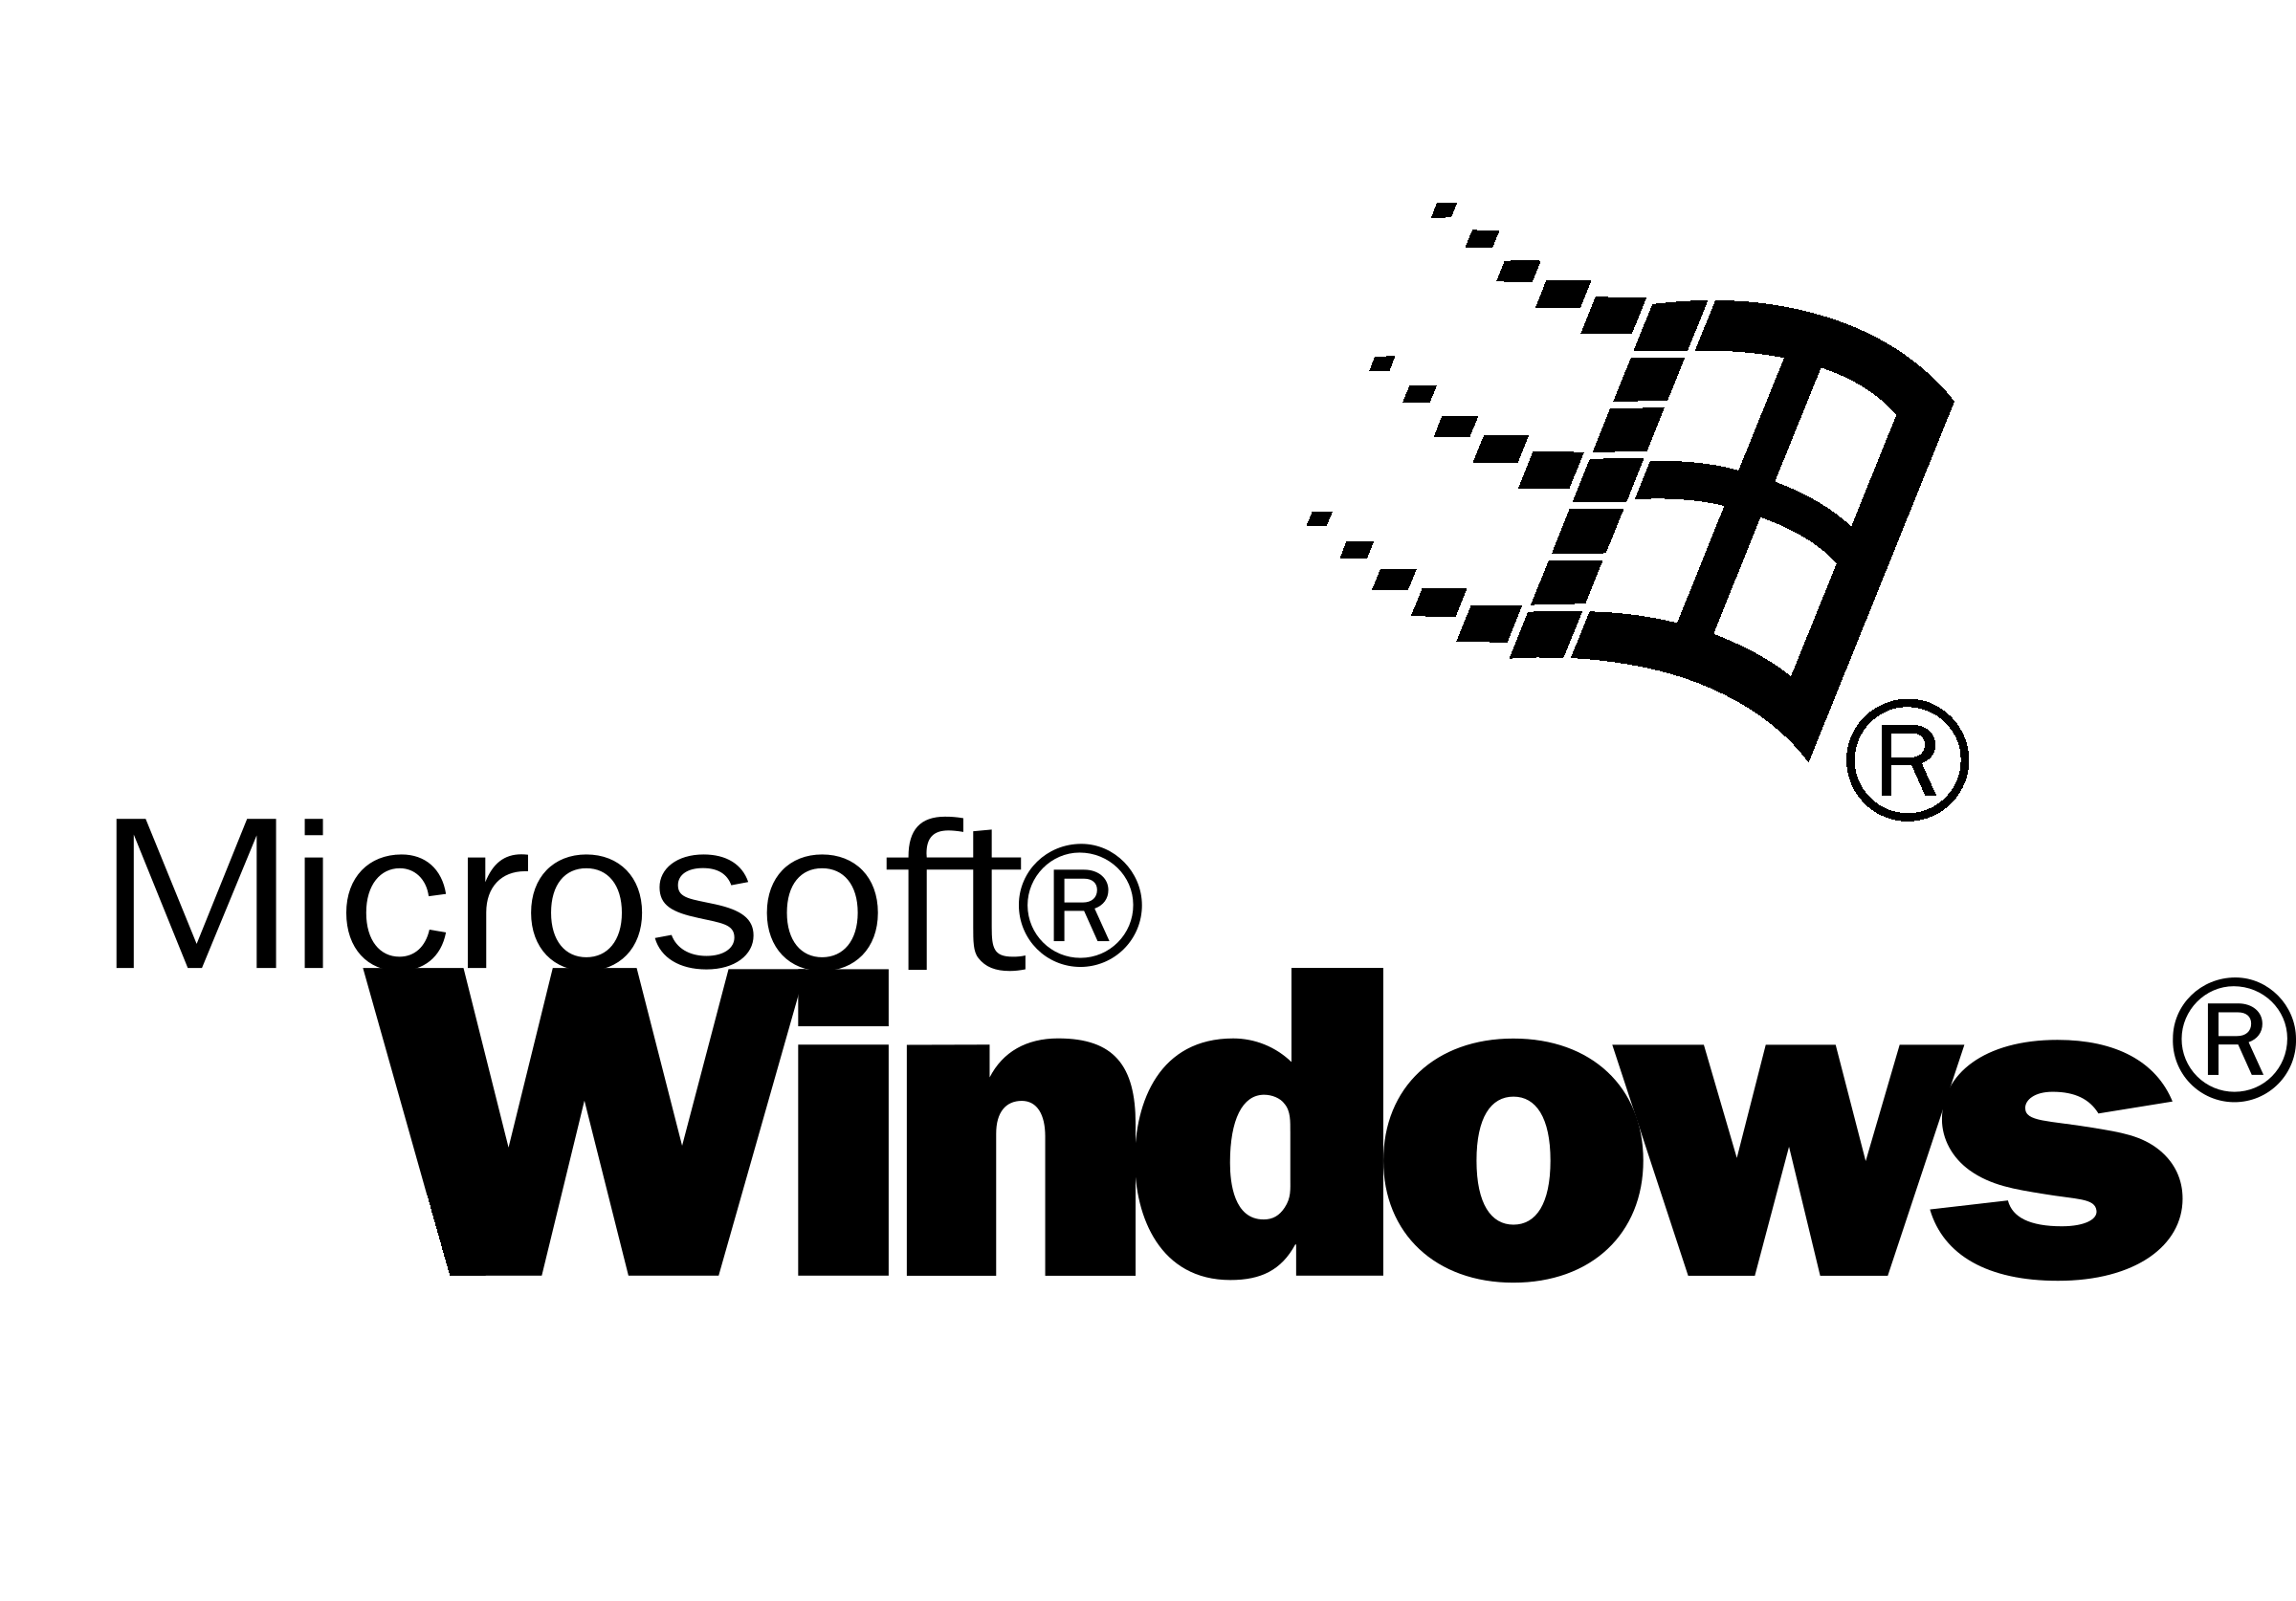 Windows 2000 Logo - Microsoft Windows 2000 Logo PNG Transparent & SVG Vector - Freebie ...